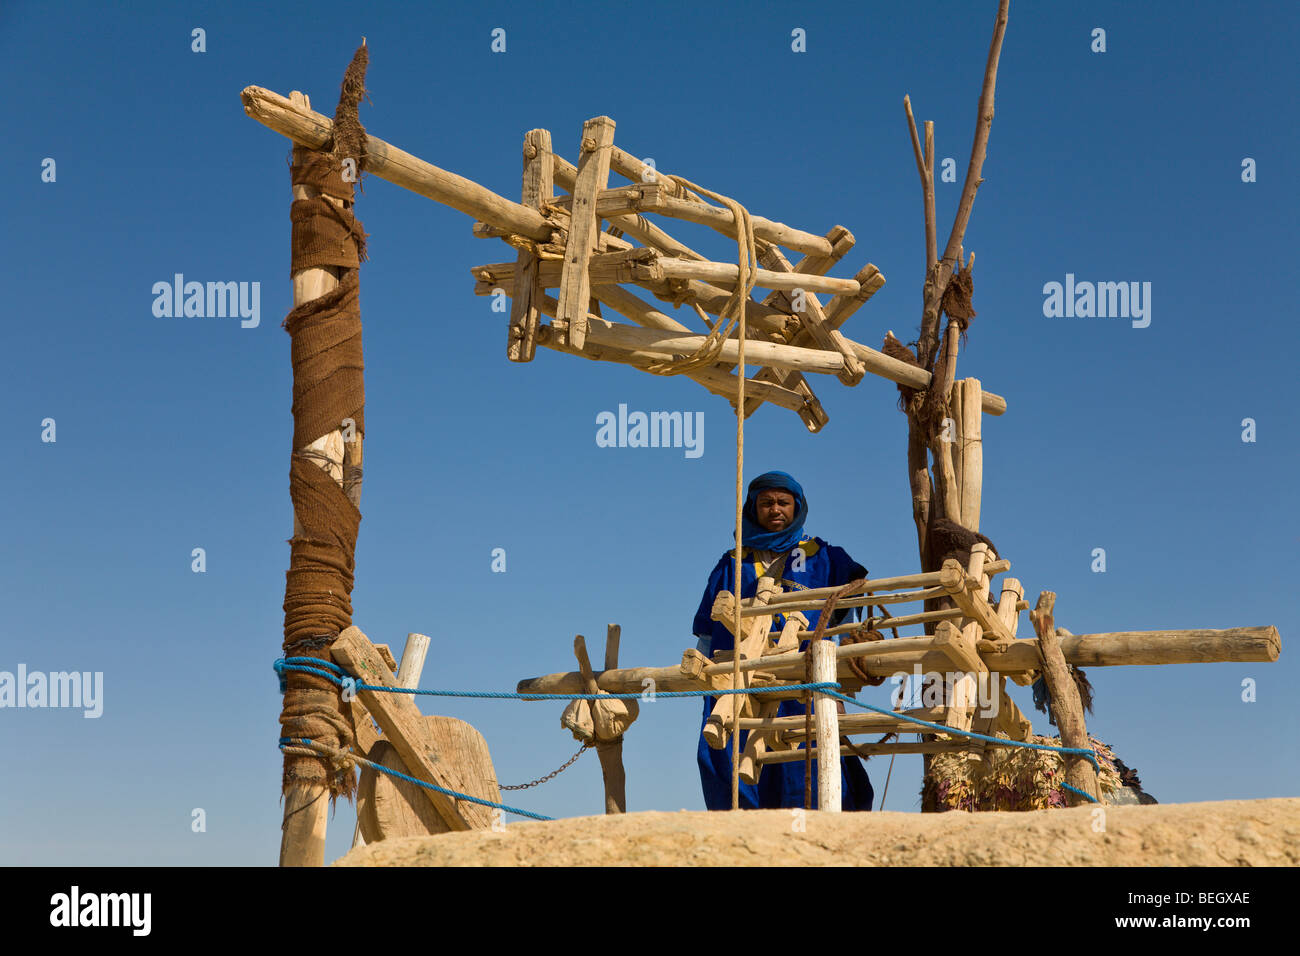 Touareg man operating an irrigation system Morocco Stock Photo